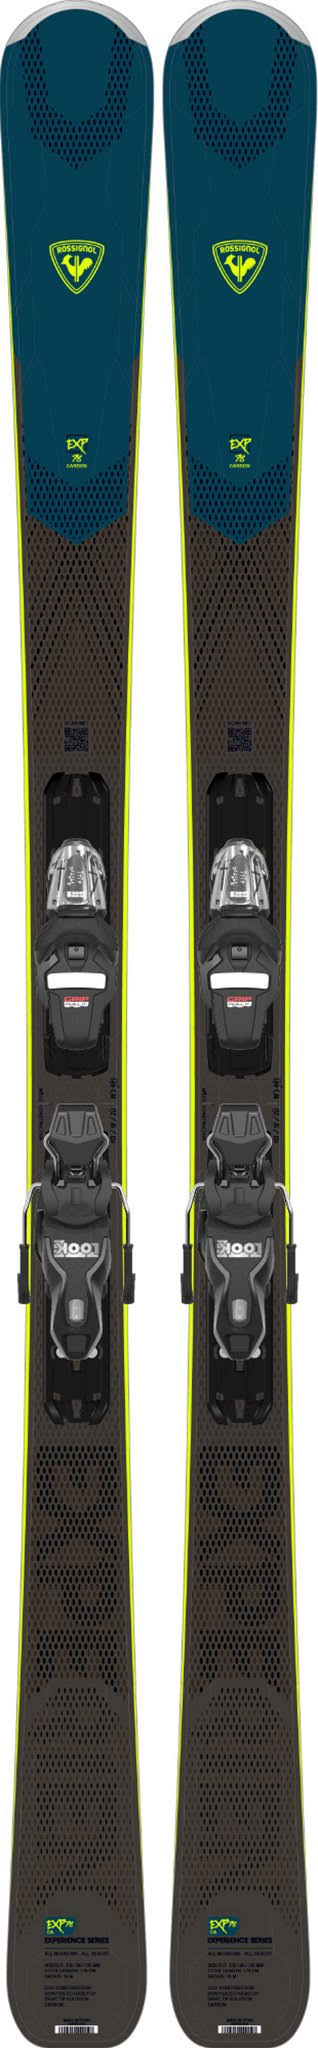 Rossignol Experience 78 Carbon (Dark Xpress 10 GW B83 Binding) All Mountain Skis - Men's 170 cm No Color